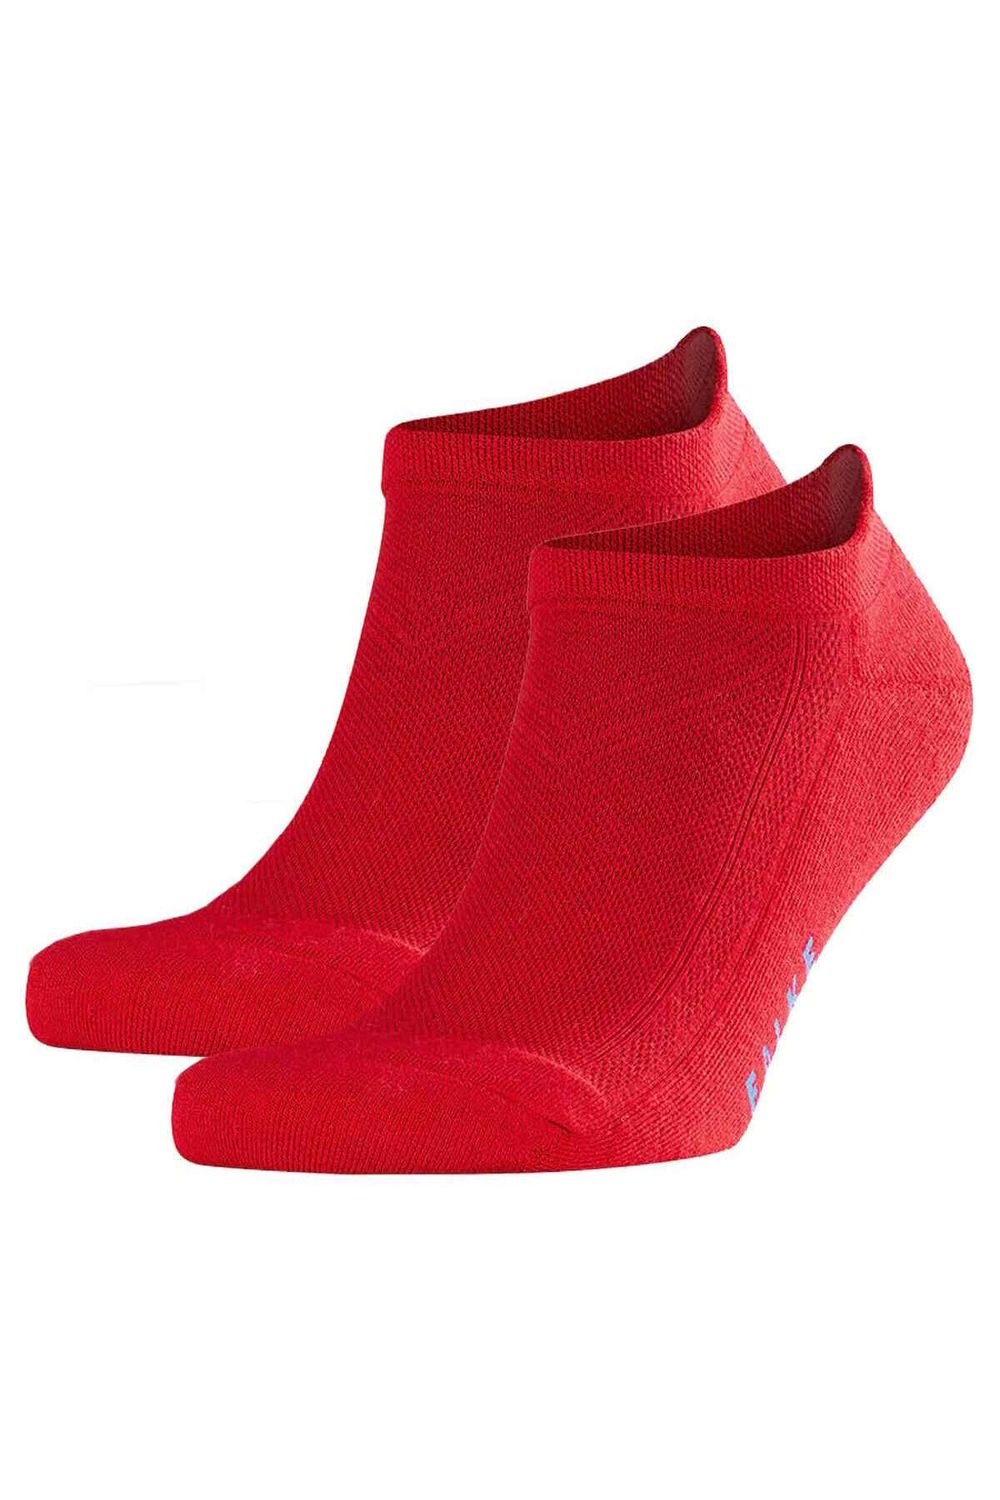 Socken, 37-48 Uni, Kick, Cool Sneakersocken anatomisch, - - 2er FALKE Trendyol ultraleicht, Unisex Pack